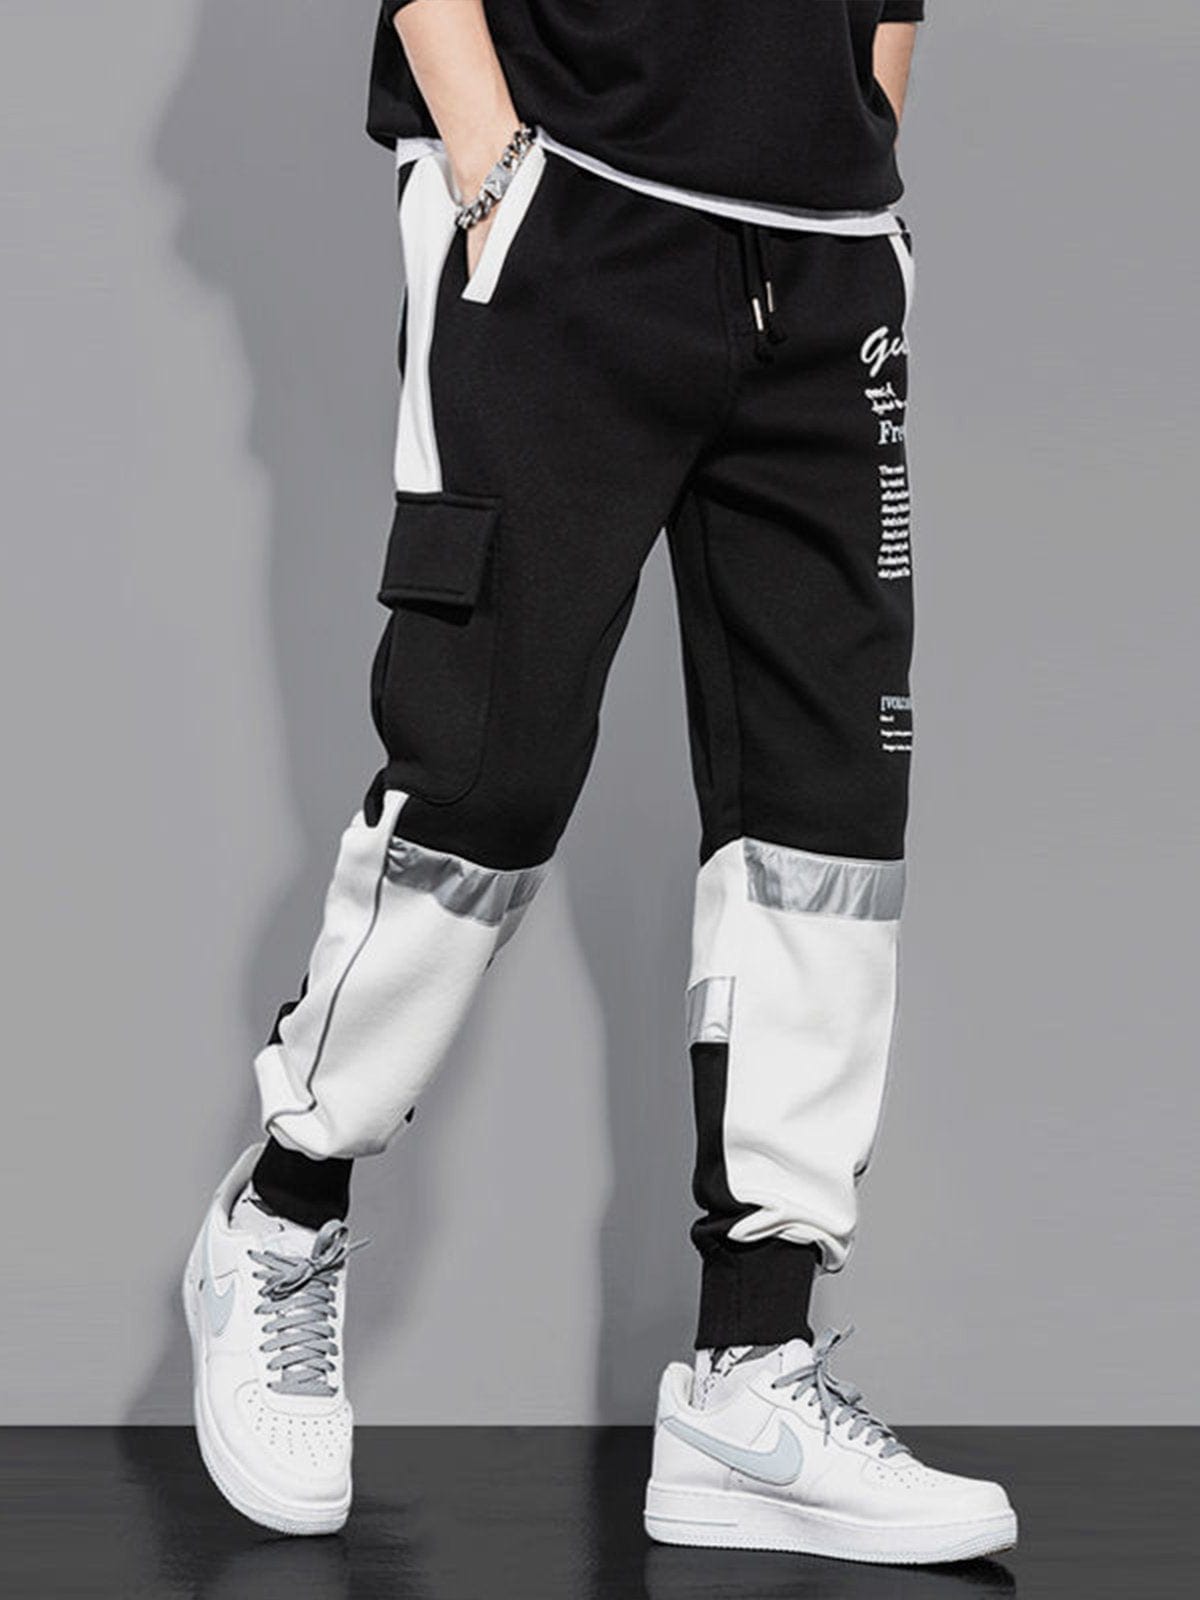 Patchwork Reflective Pants Streetwear Brand Techwear Combat Tactical YUGEN THEORY